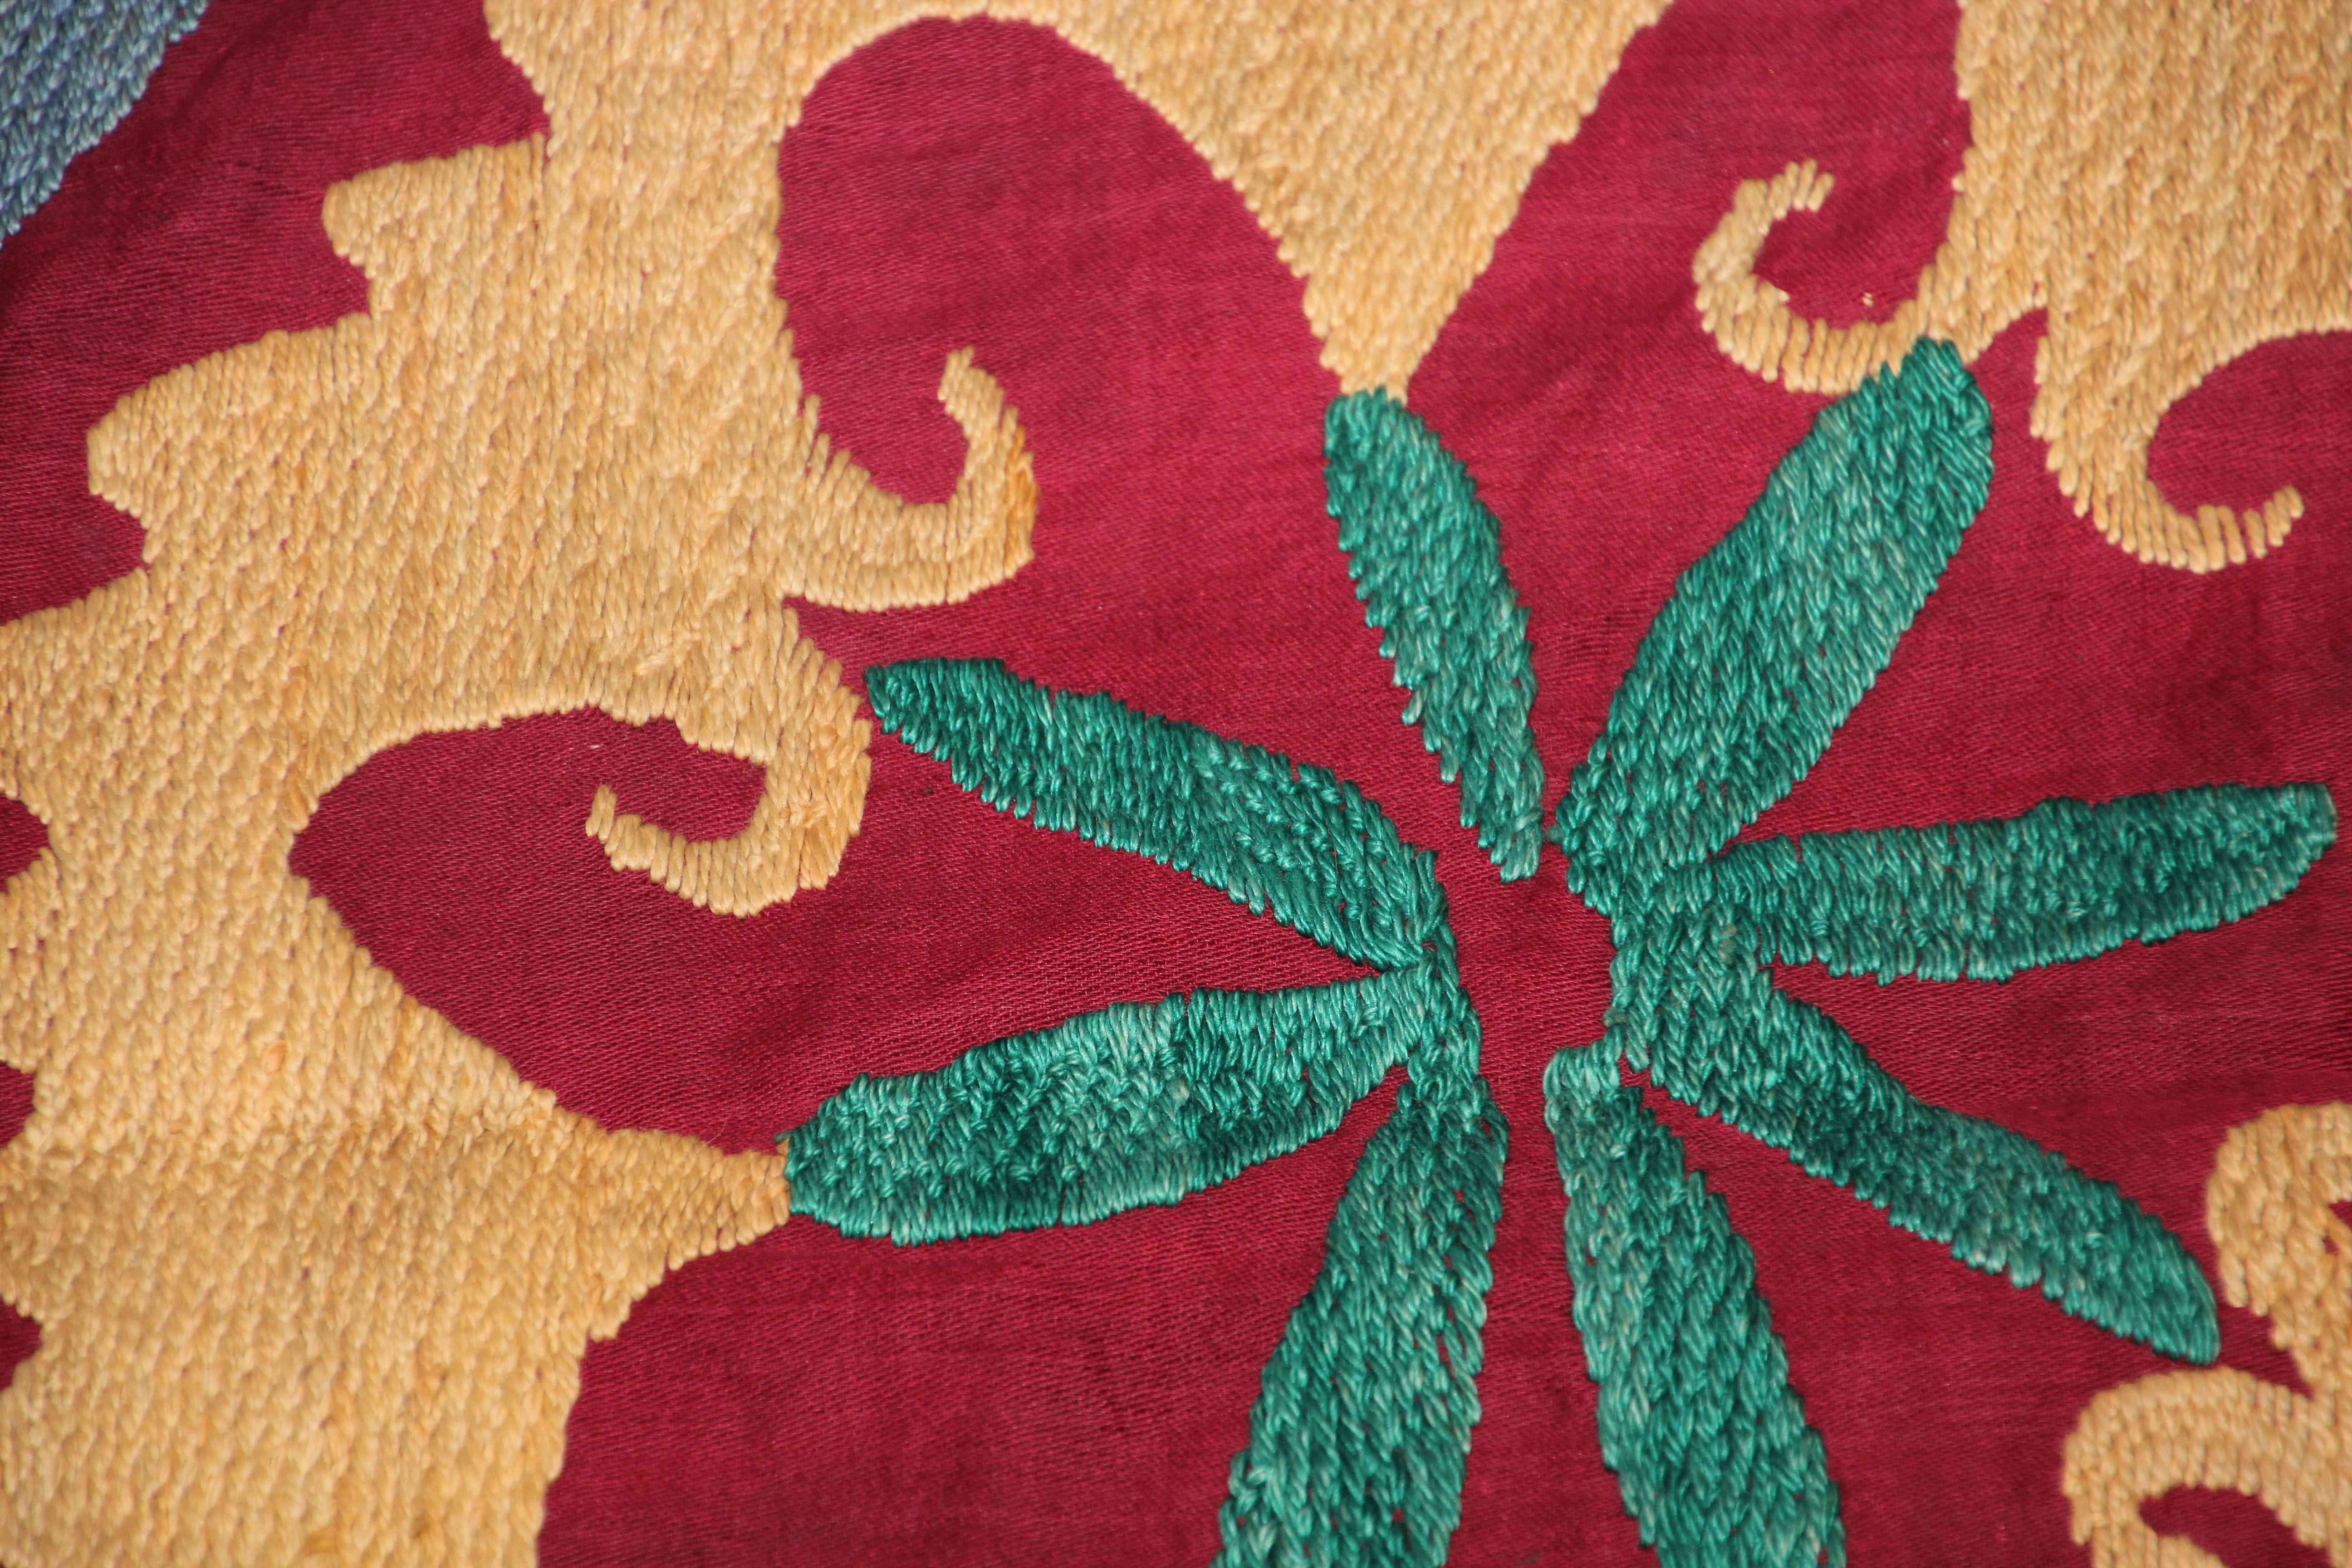 Vintage Uzbek Suzani Needlework Textile Blanket or Tapestry 15